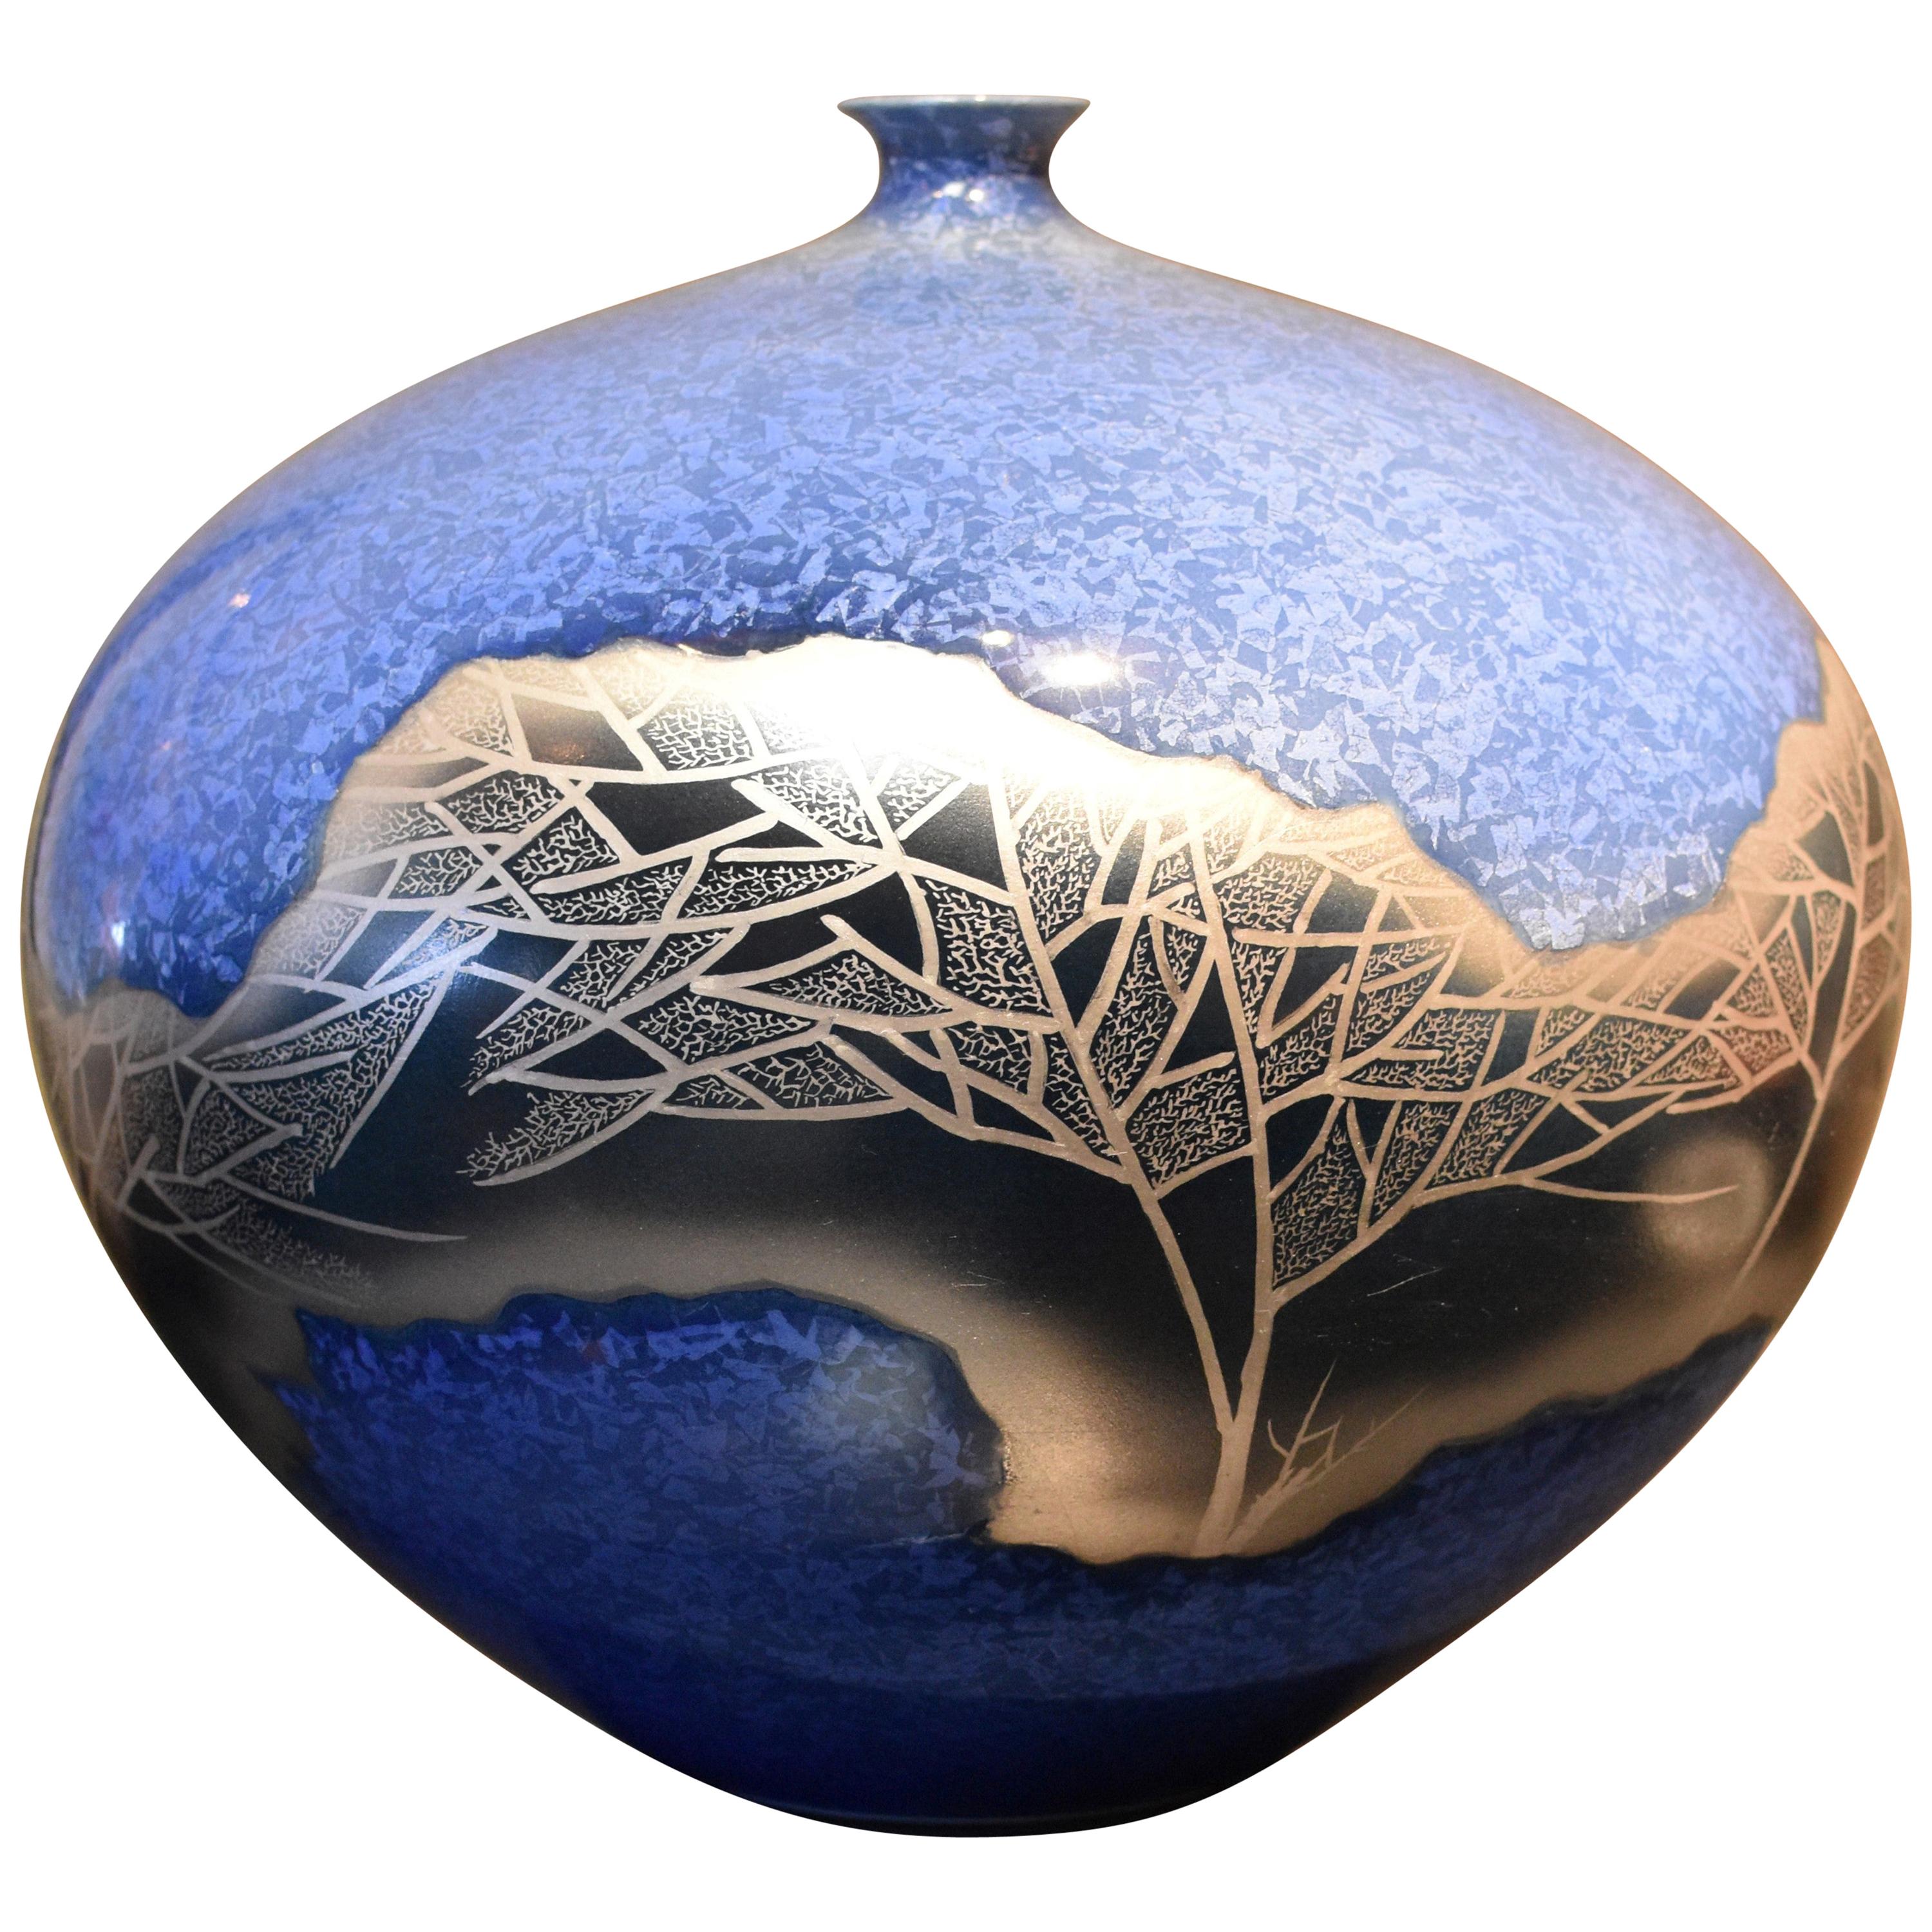 Japanese Porcelain Vase in Blue Platinum by Contemporary Master Artist For Sale